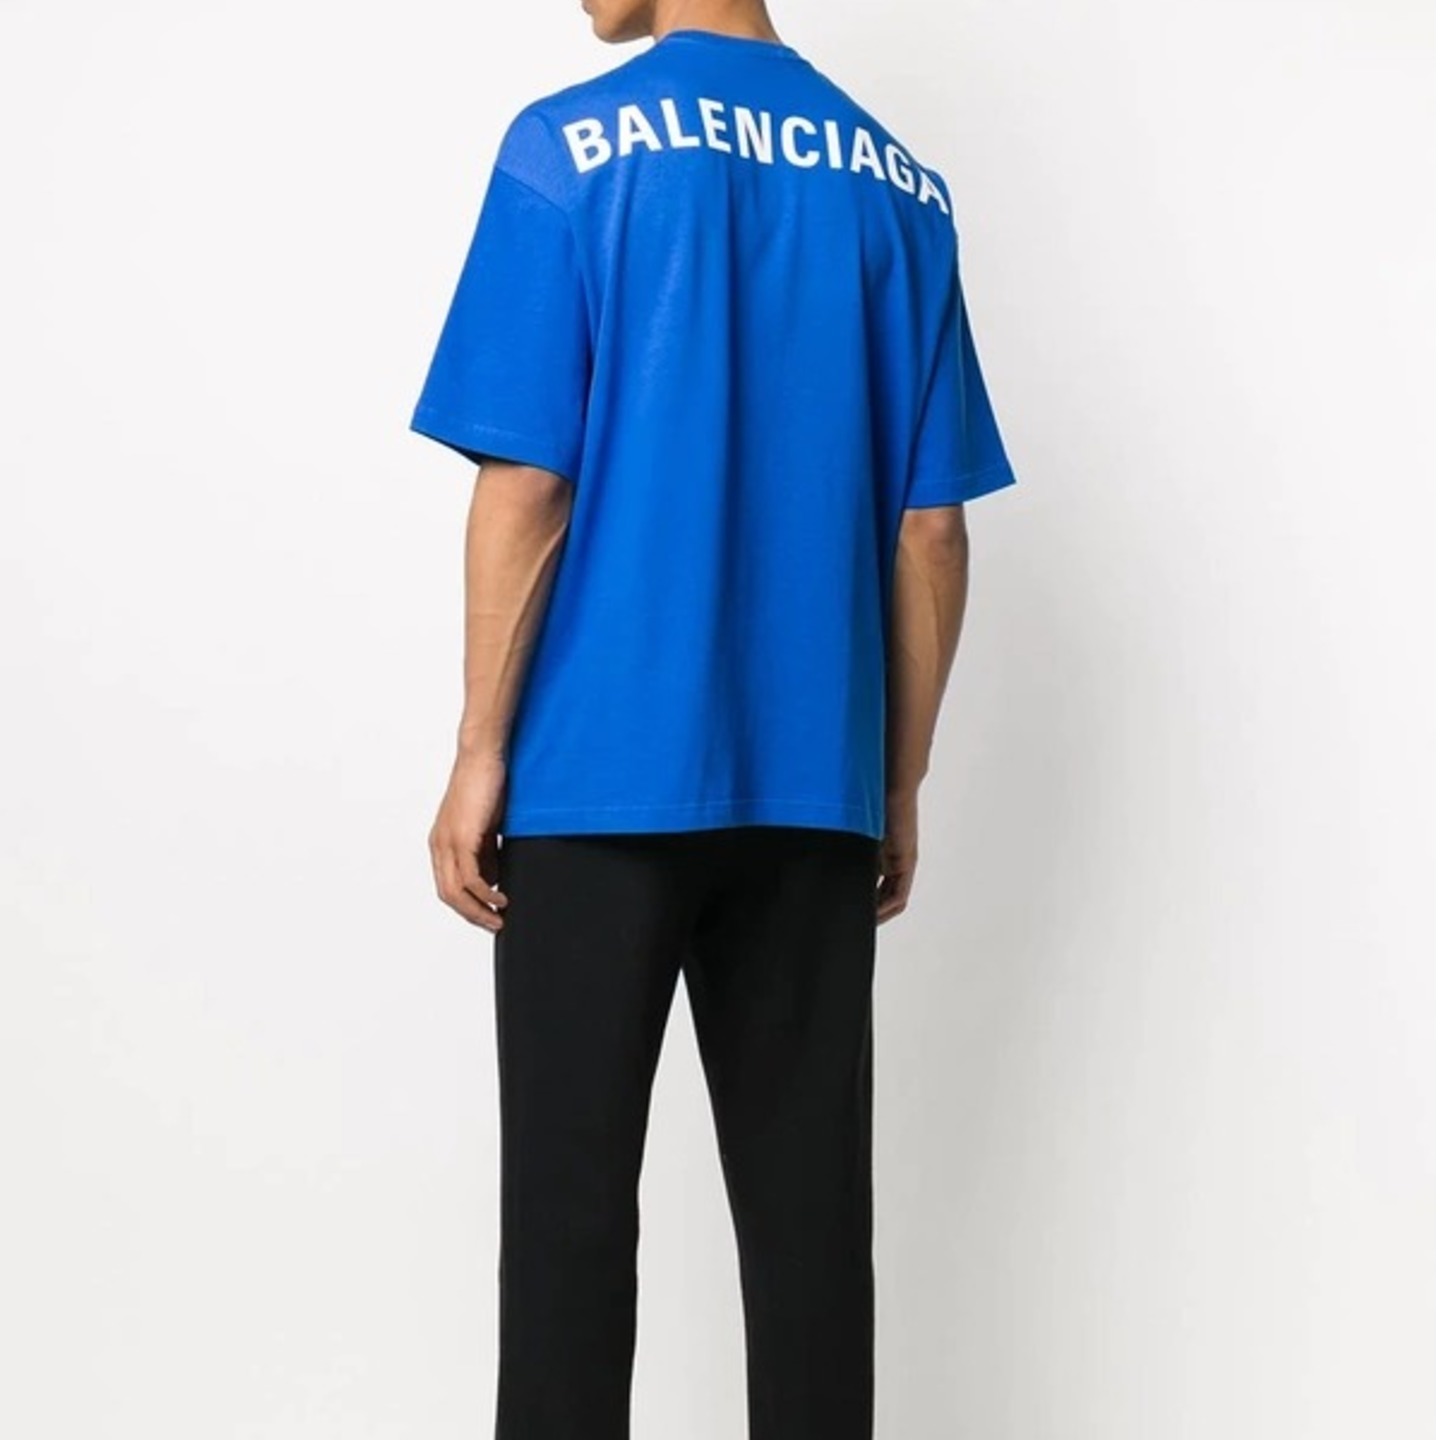 Balenciaga back logo blue T Shirt